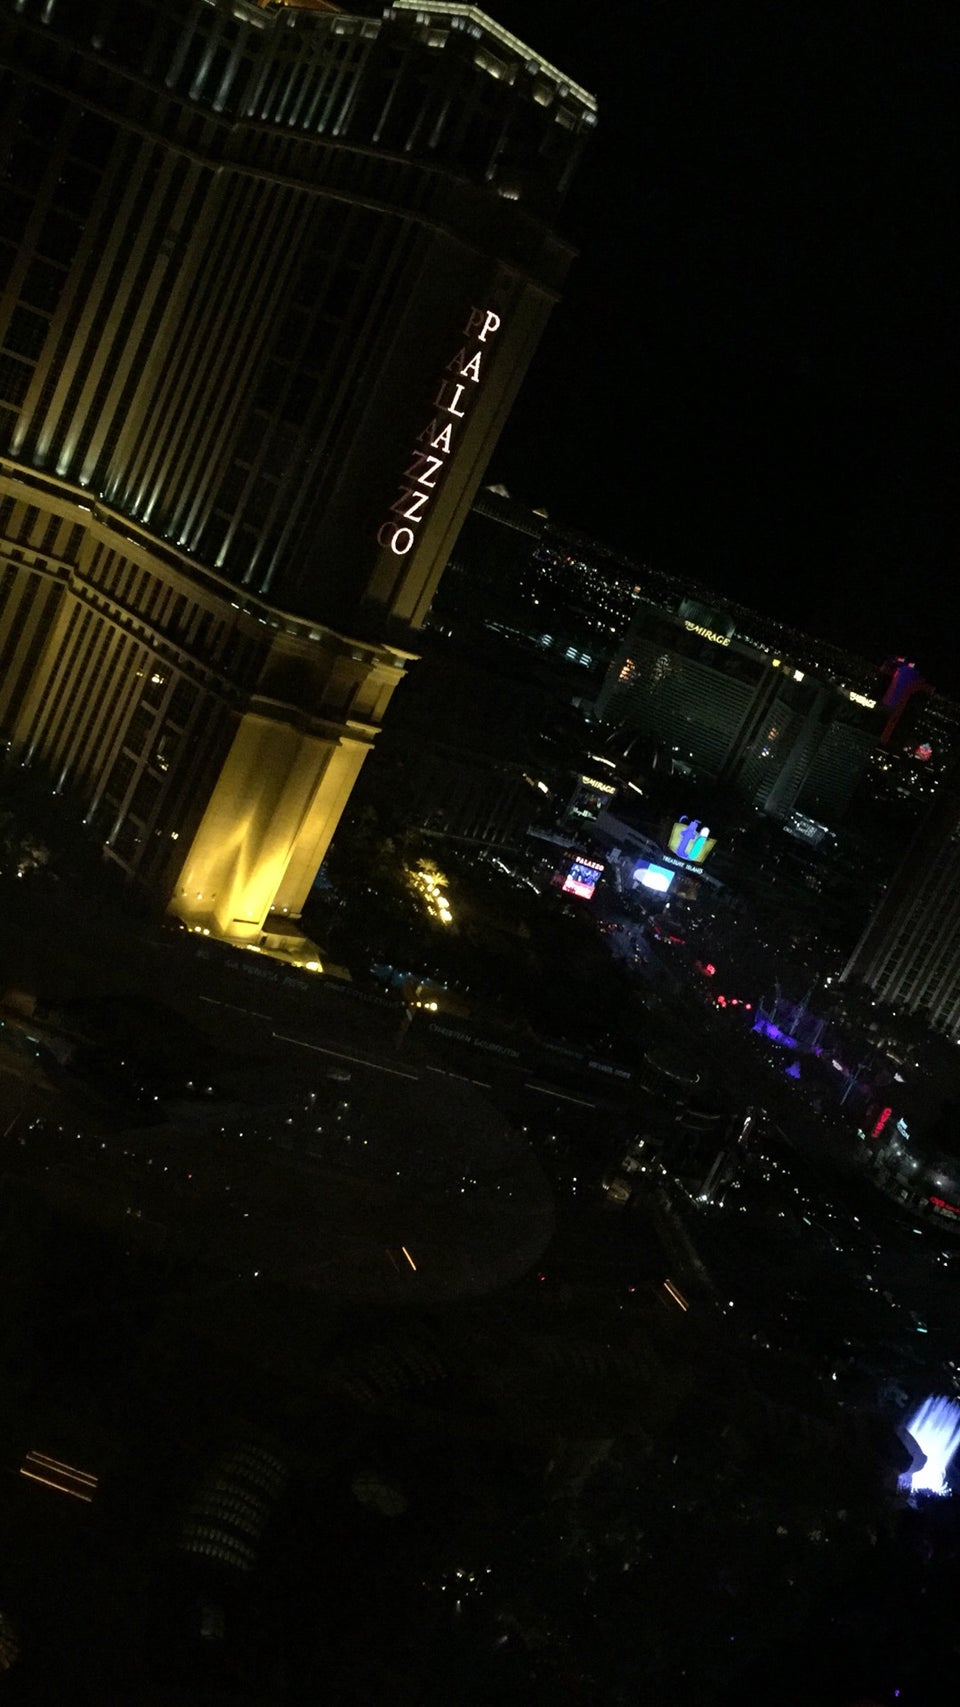 Photo of Wynn Las Vegas